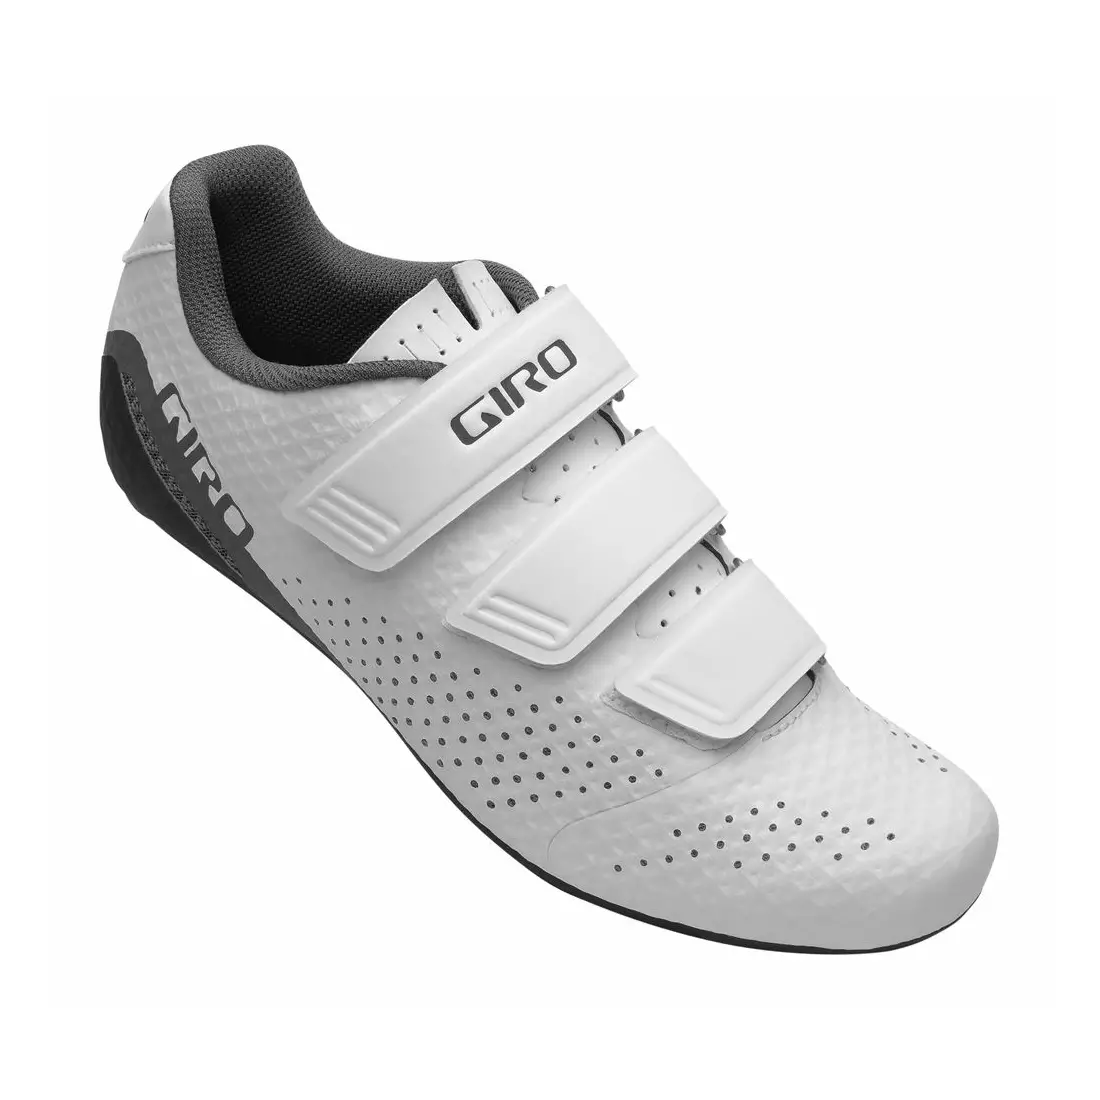 GIRO női kerékpáros cipő stylus w white GR-7123034